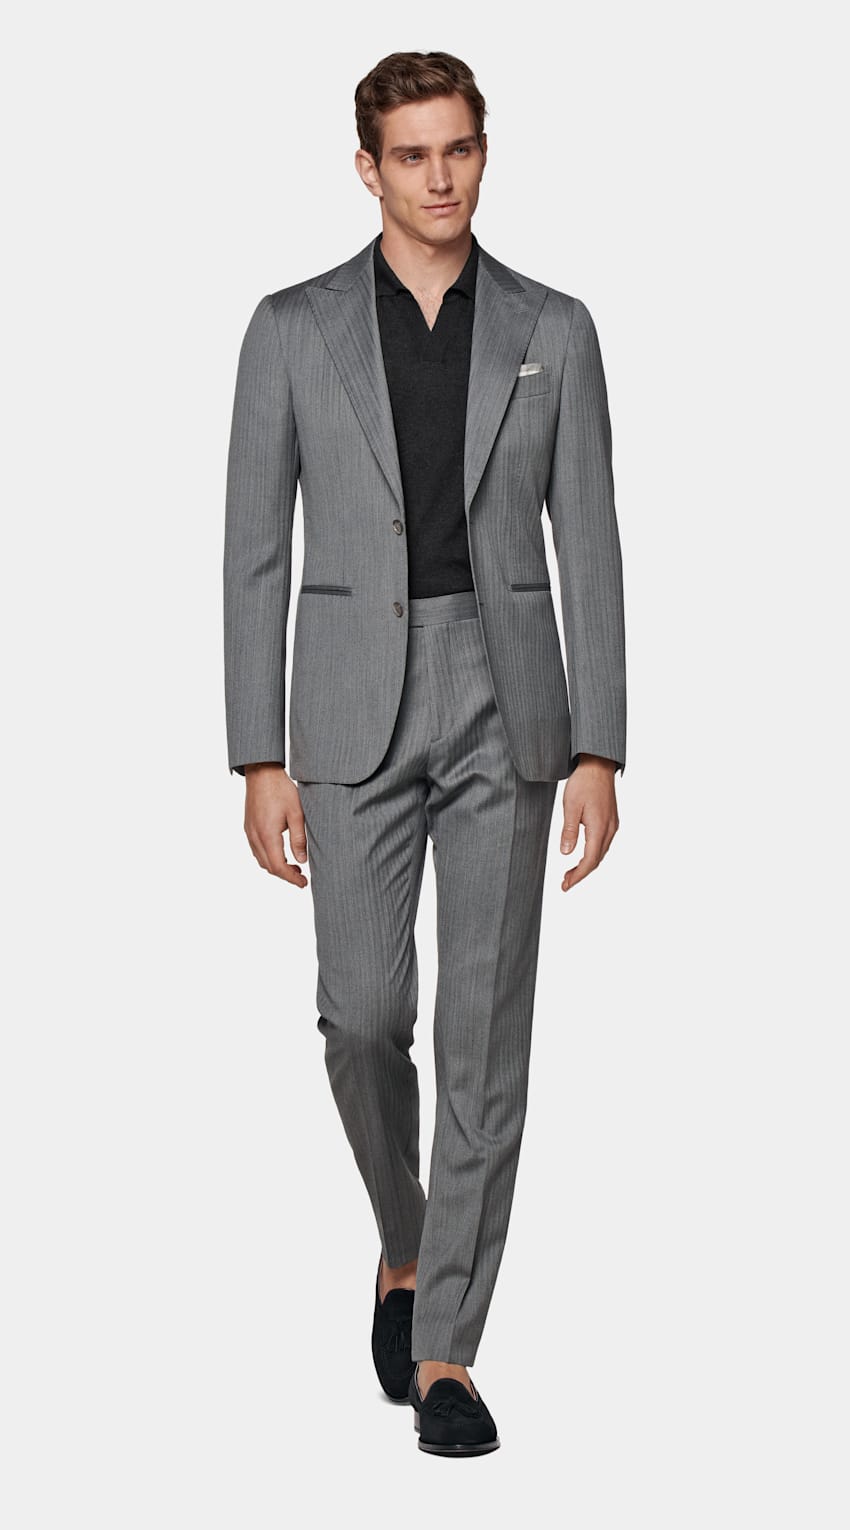 SUITSUPPLY Pure S110's Wool by Vitale Barberis Canonico, Italy Mid Grey Herringbone Havana Suit